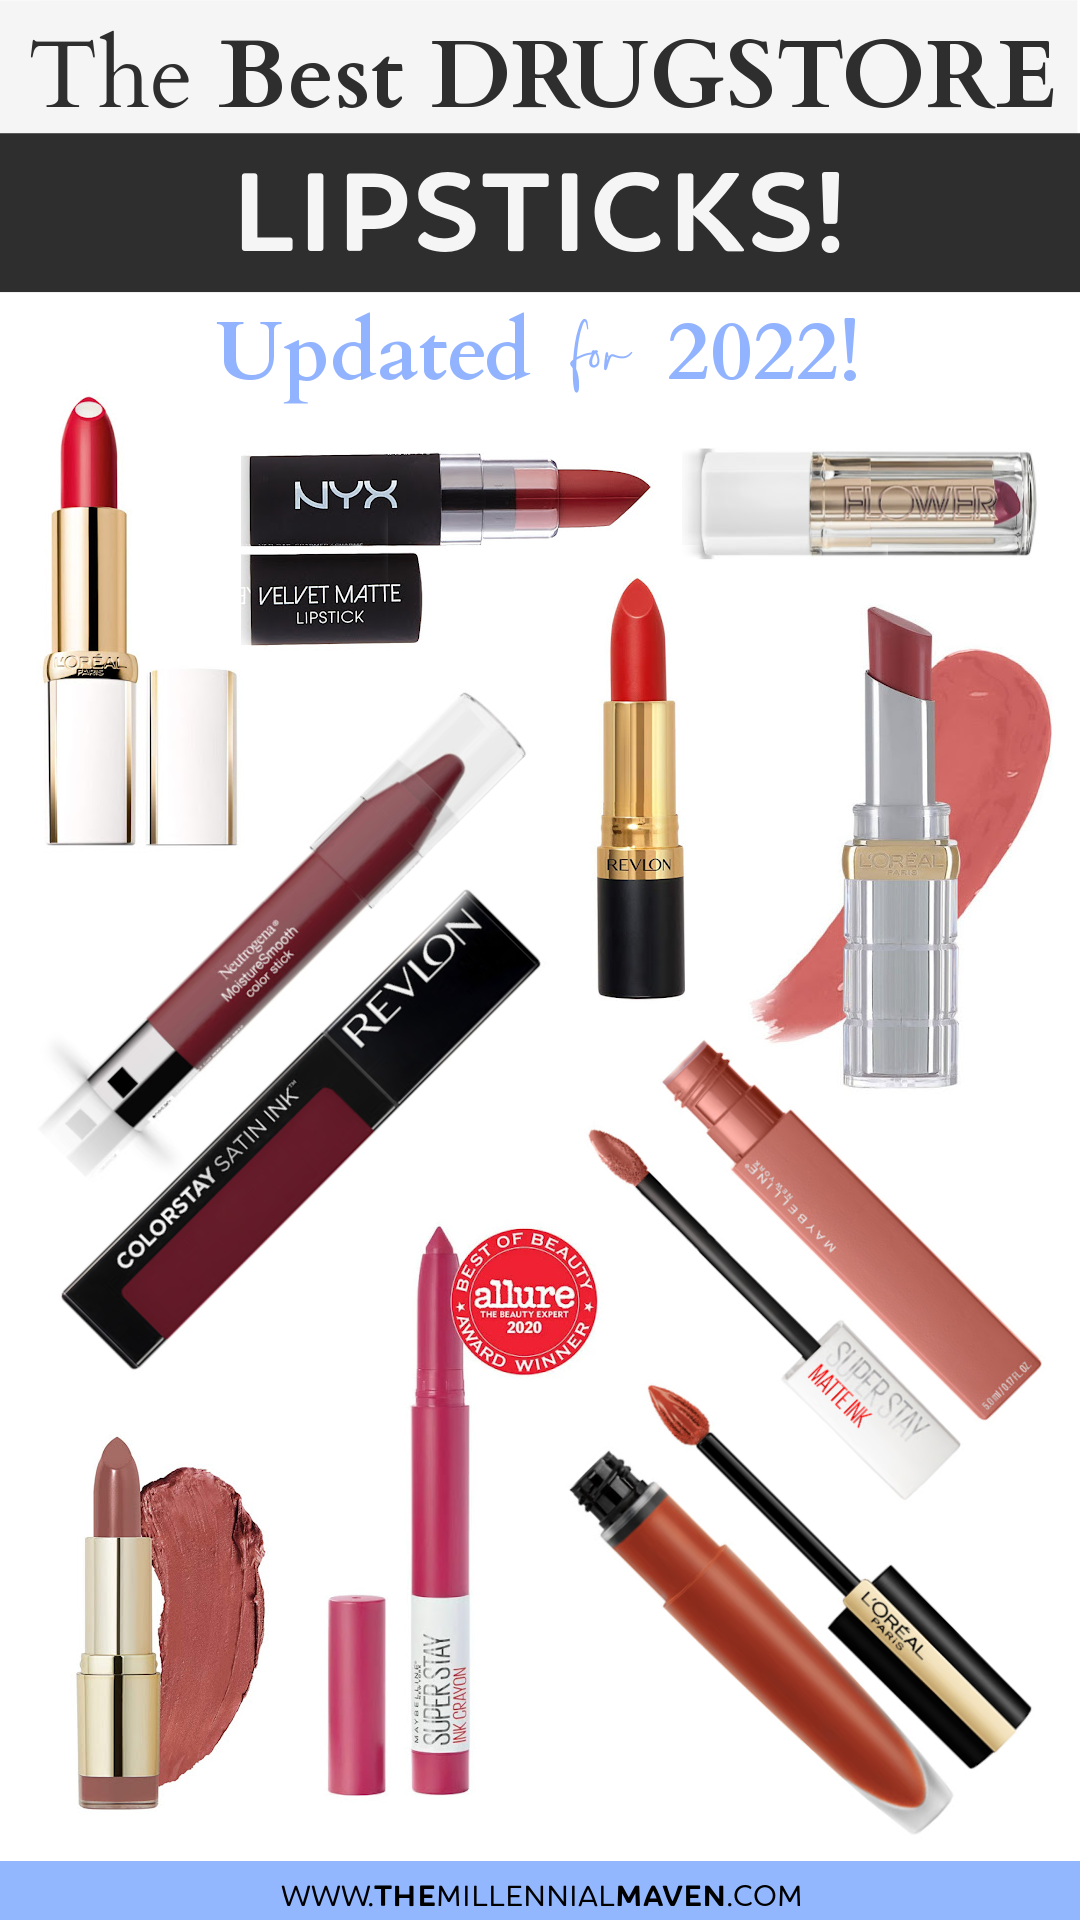 Top 10 Best Lipsticks at the Drugstore in 2022! | Best Drugstore Lipsticks